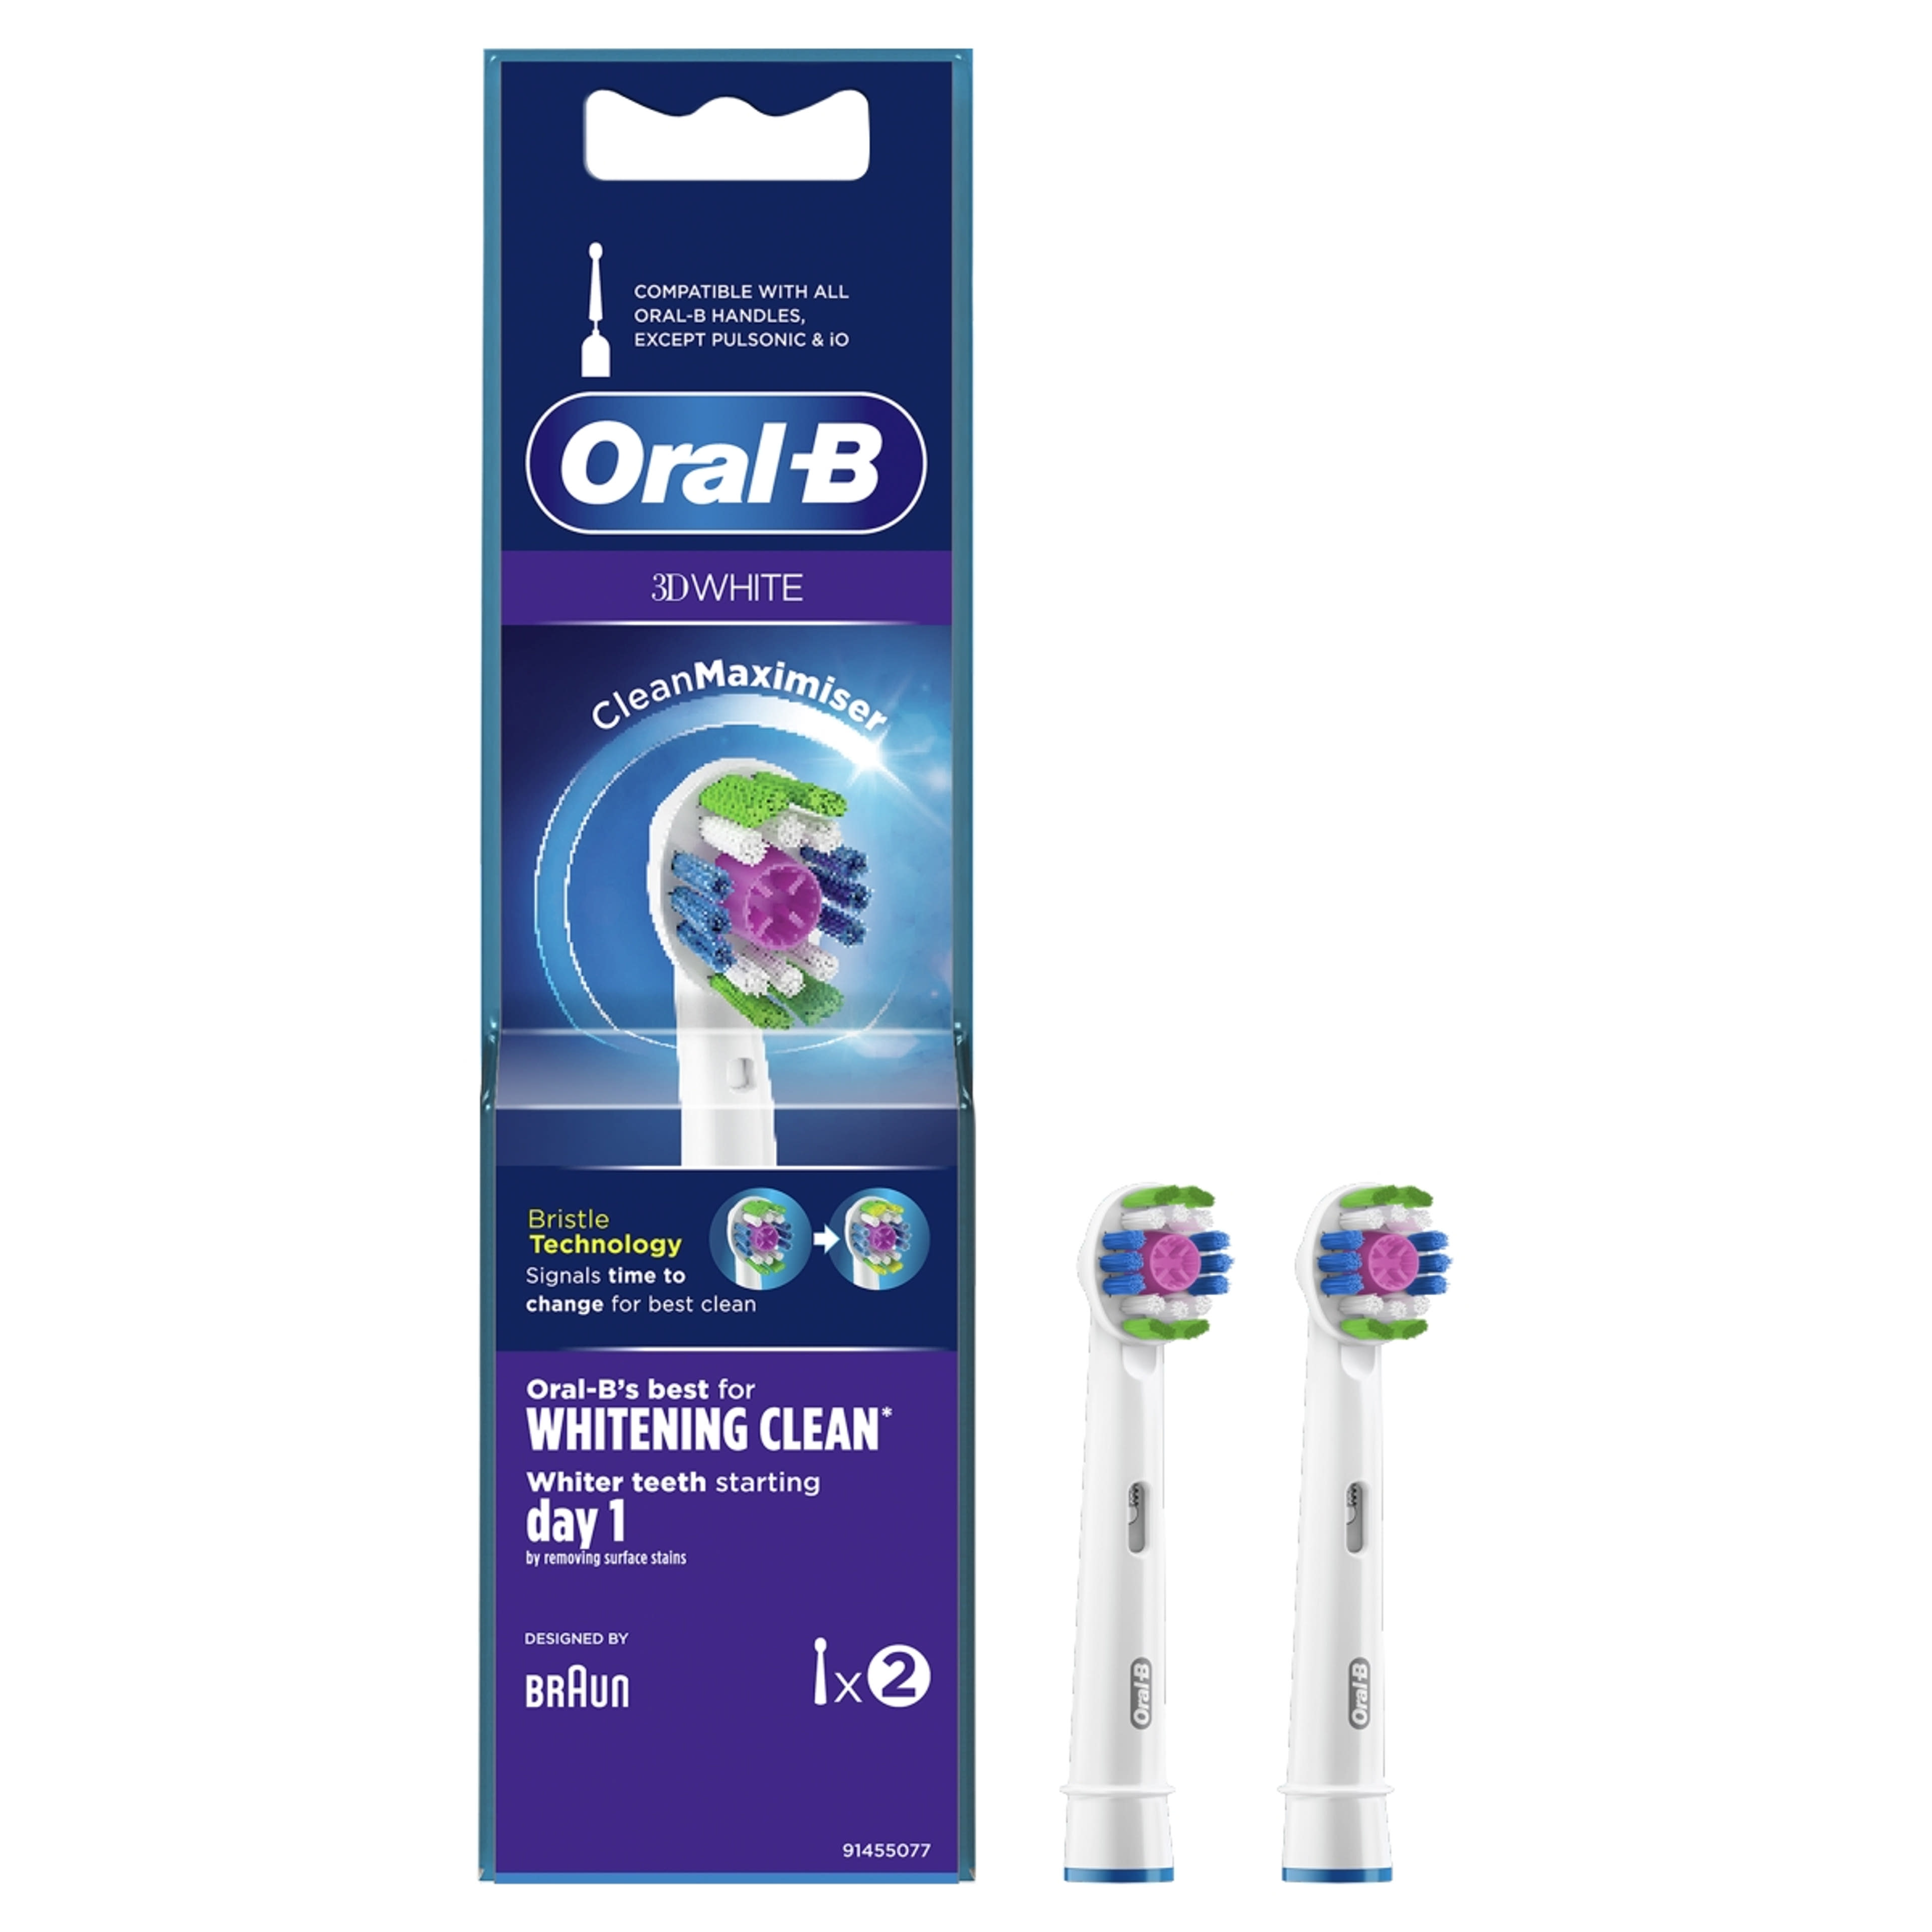 Oral-B 3D White elektromos fogkefe fótfej - 2 db-2